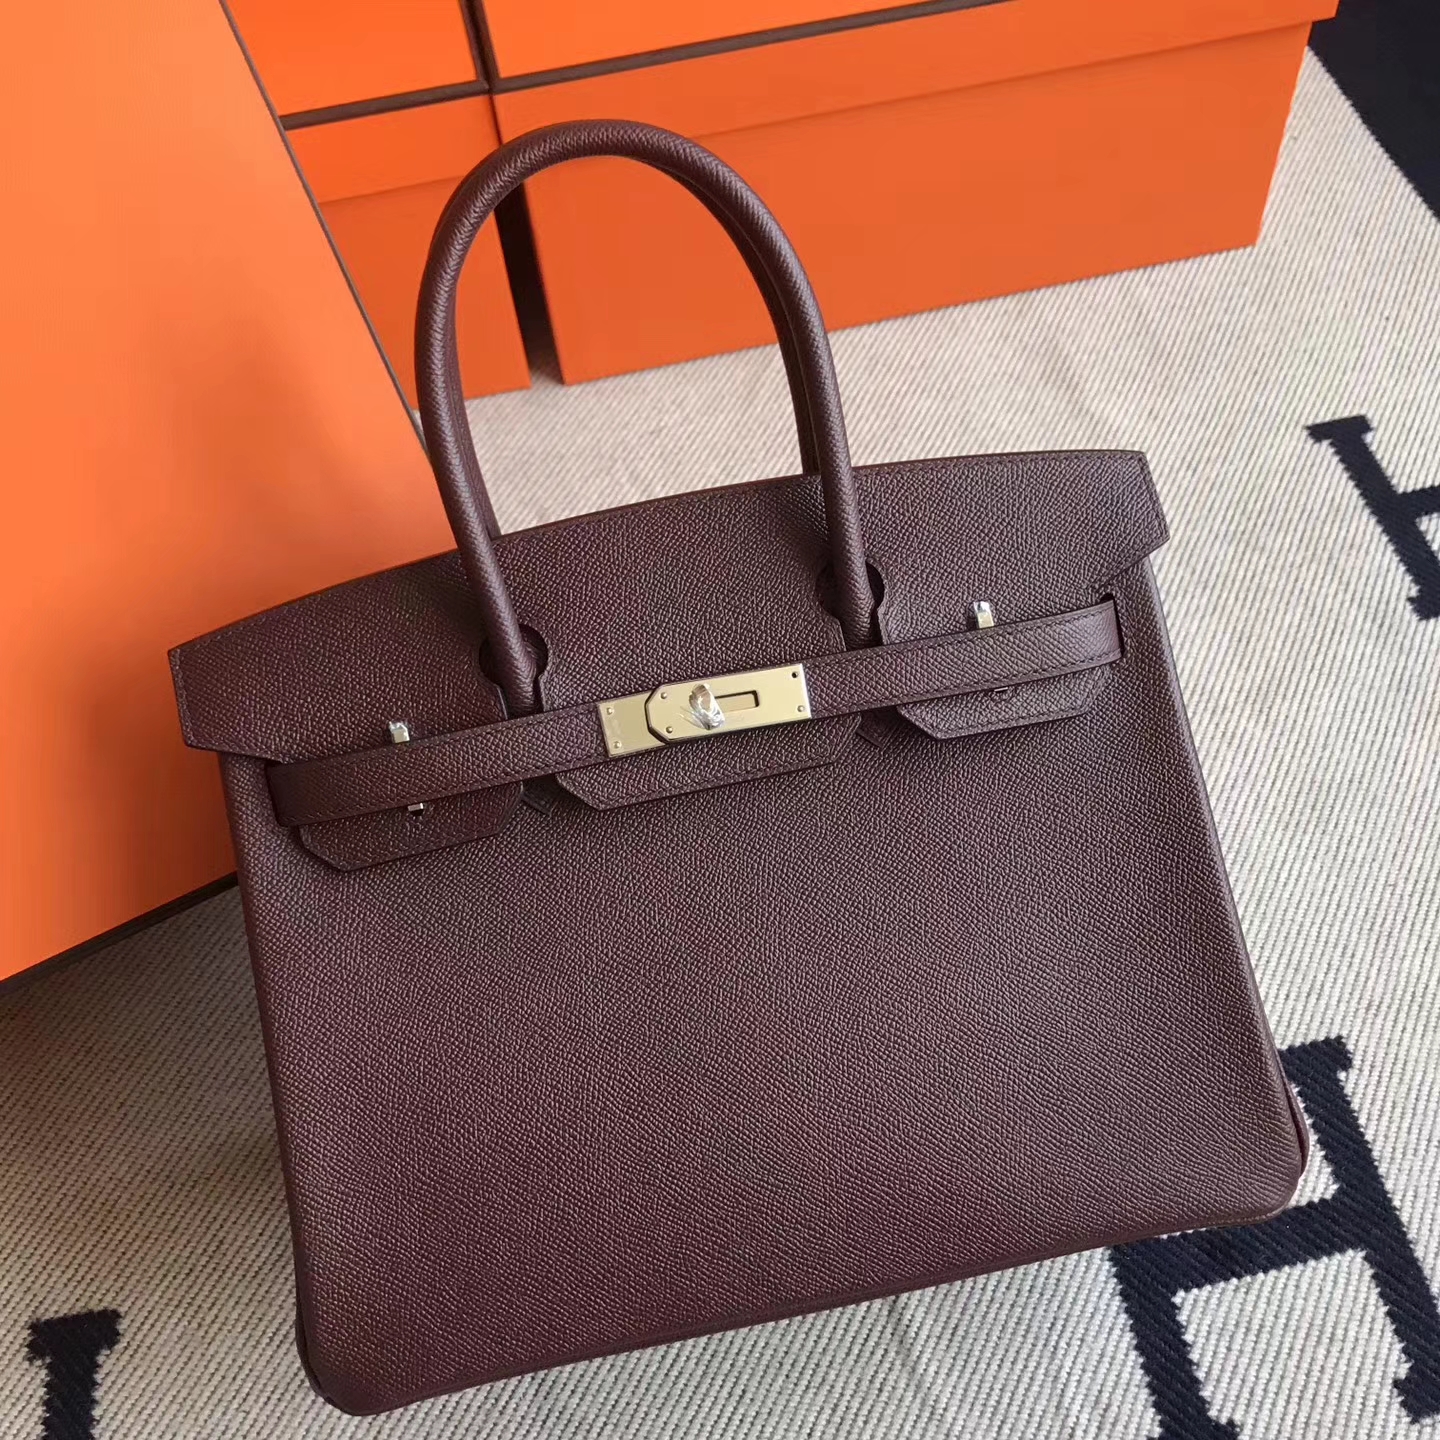 Elegant Hermes Epsom Leather Birkin Bag30cm in CK57 Bordeaux Silver Hardware